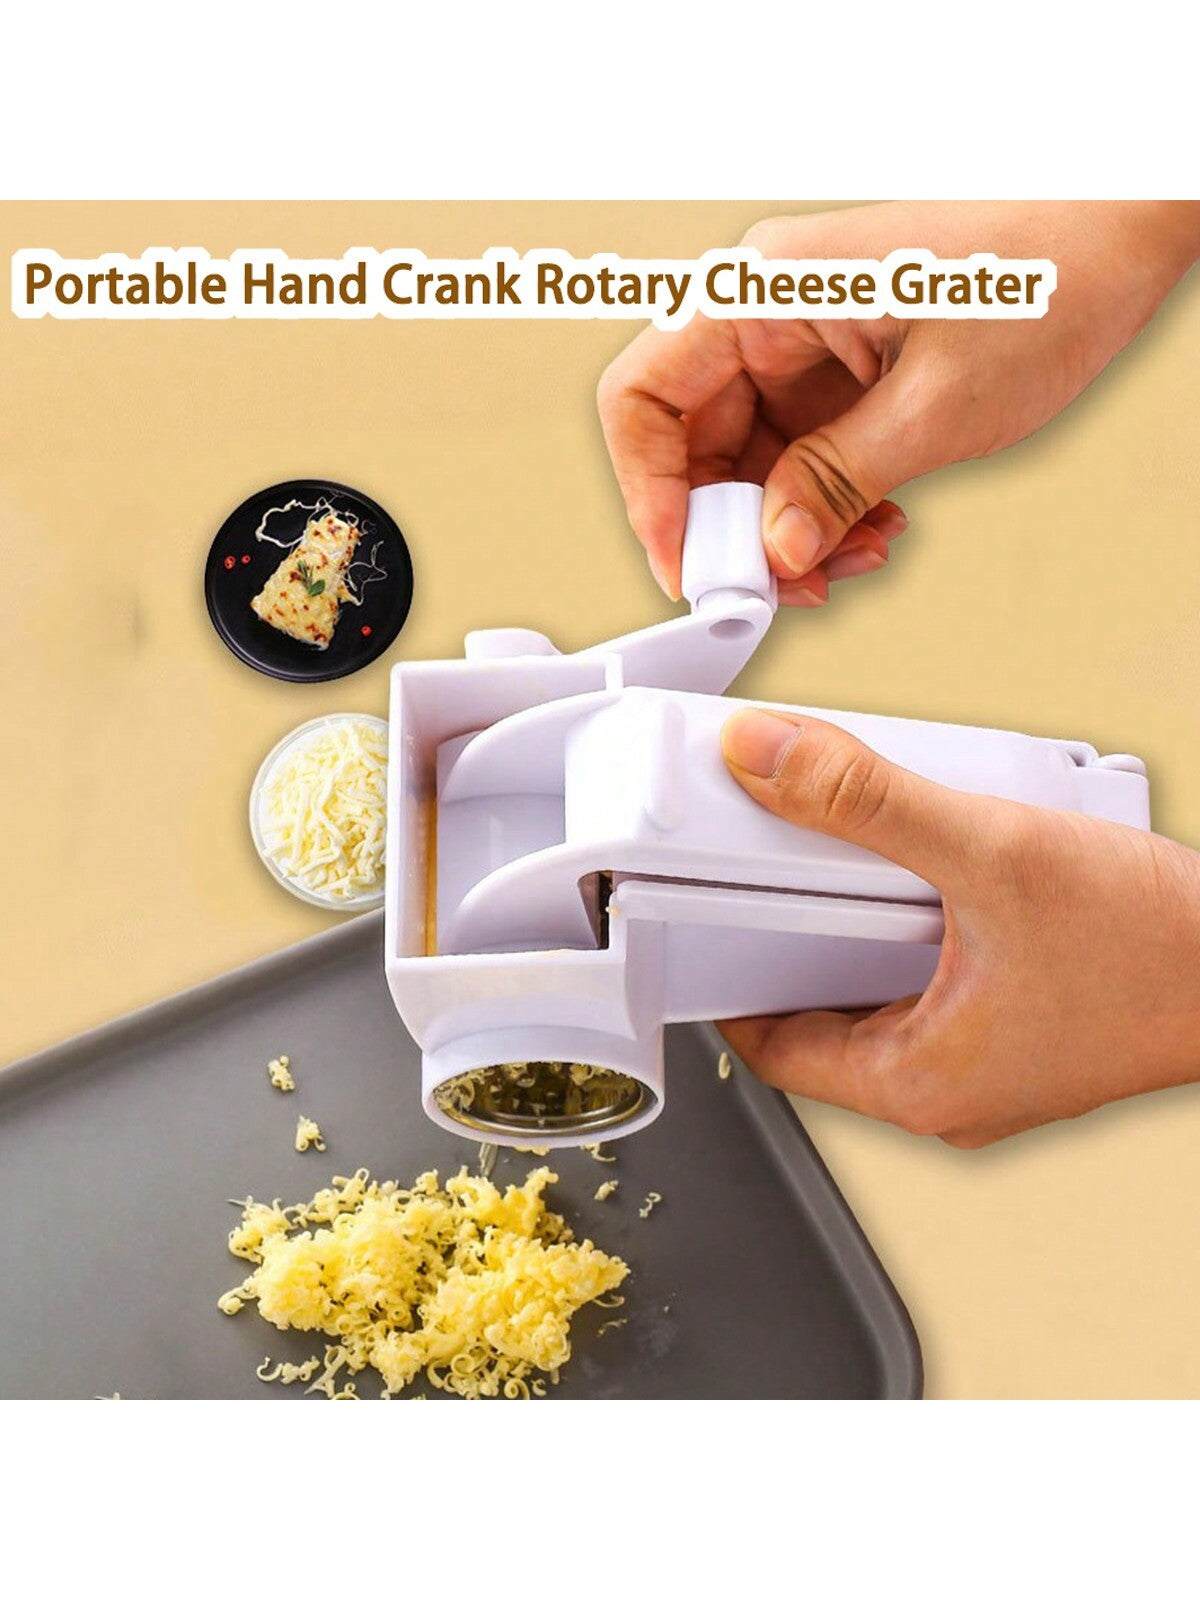 1pc Stainless Steel Hand Crank Potato Slicer, Multifunctional